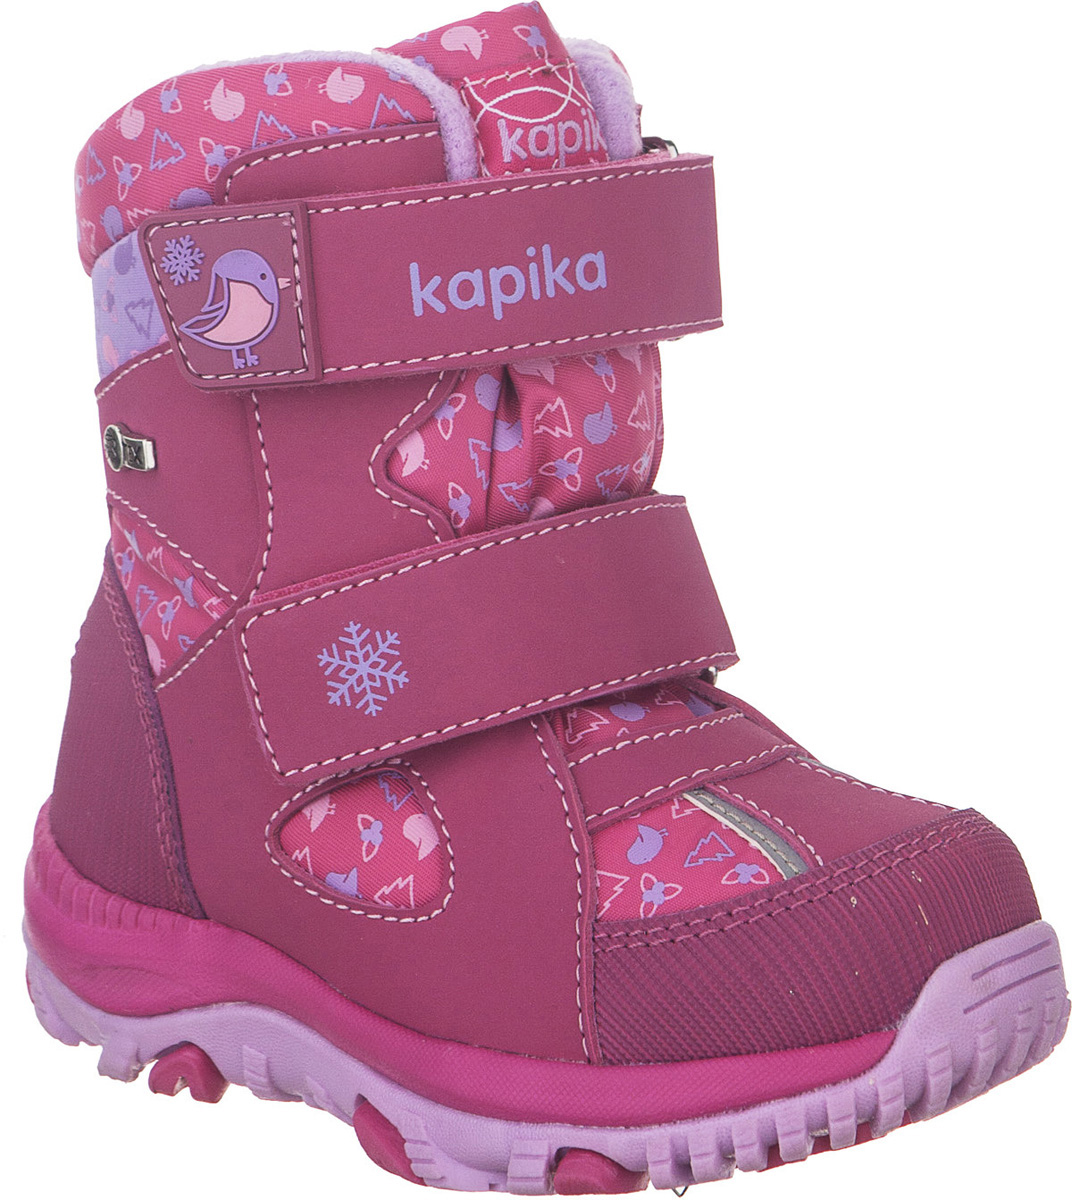 Ботинки для девочки Kapika KapiTEX, цвет: фуксия. 41223-2. Размер 23